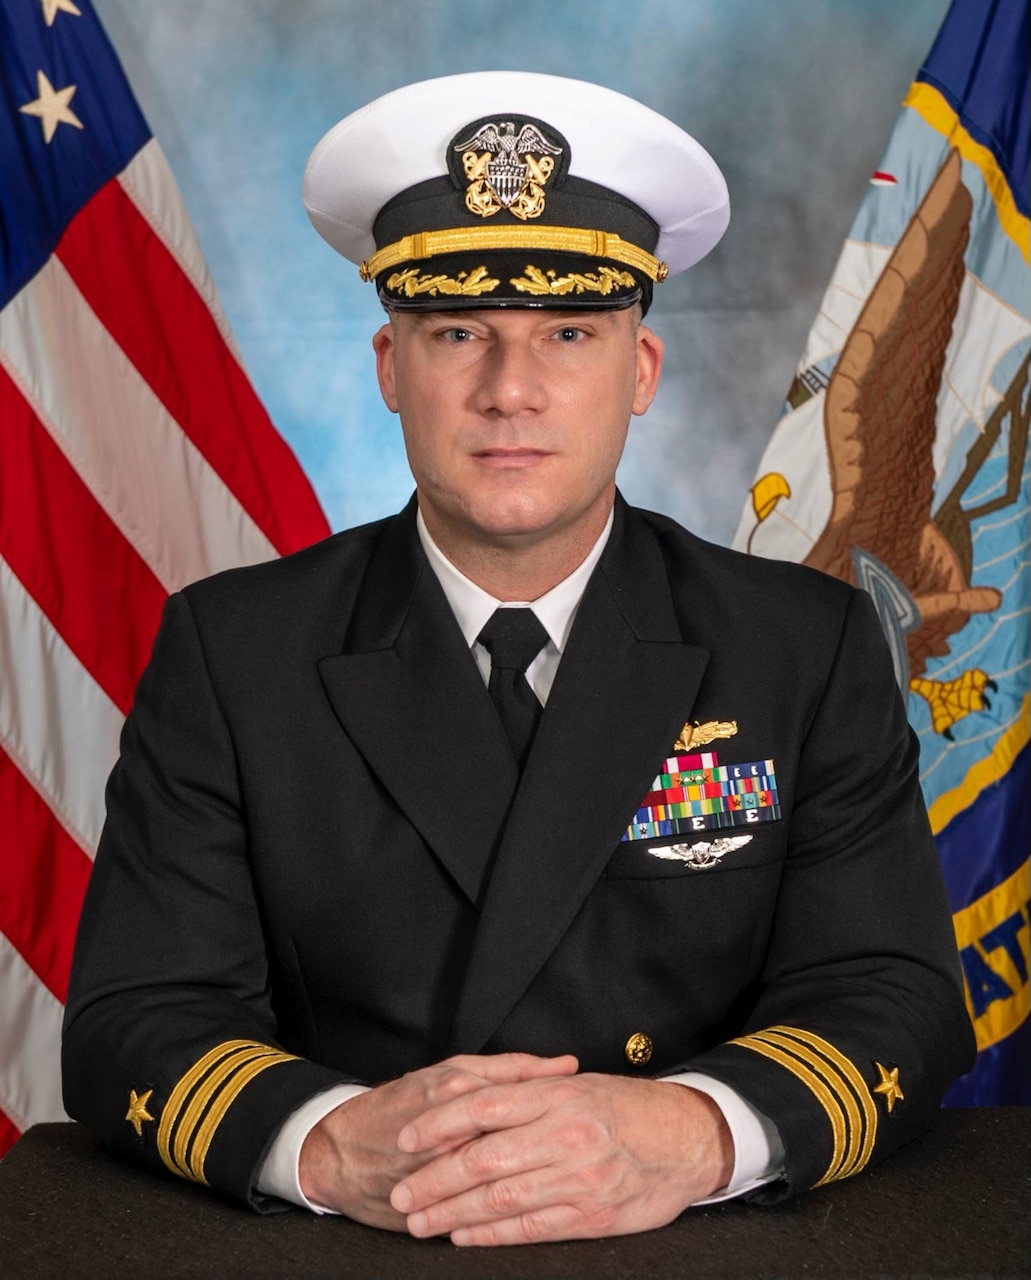 Commander James Giles